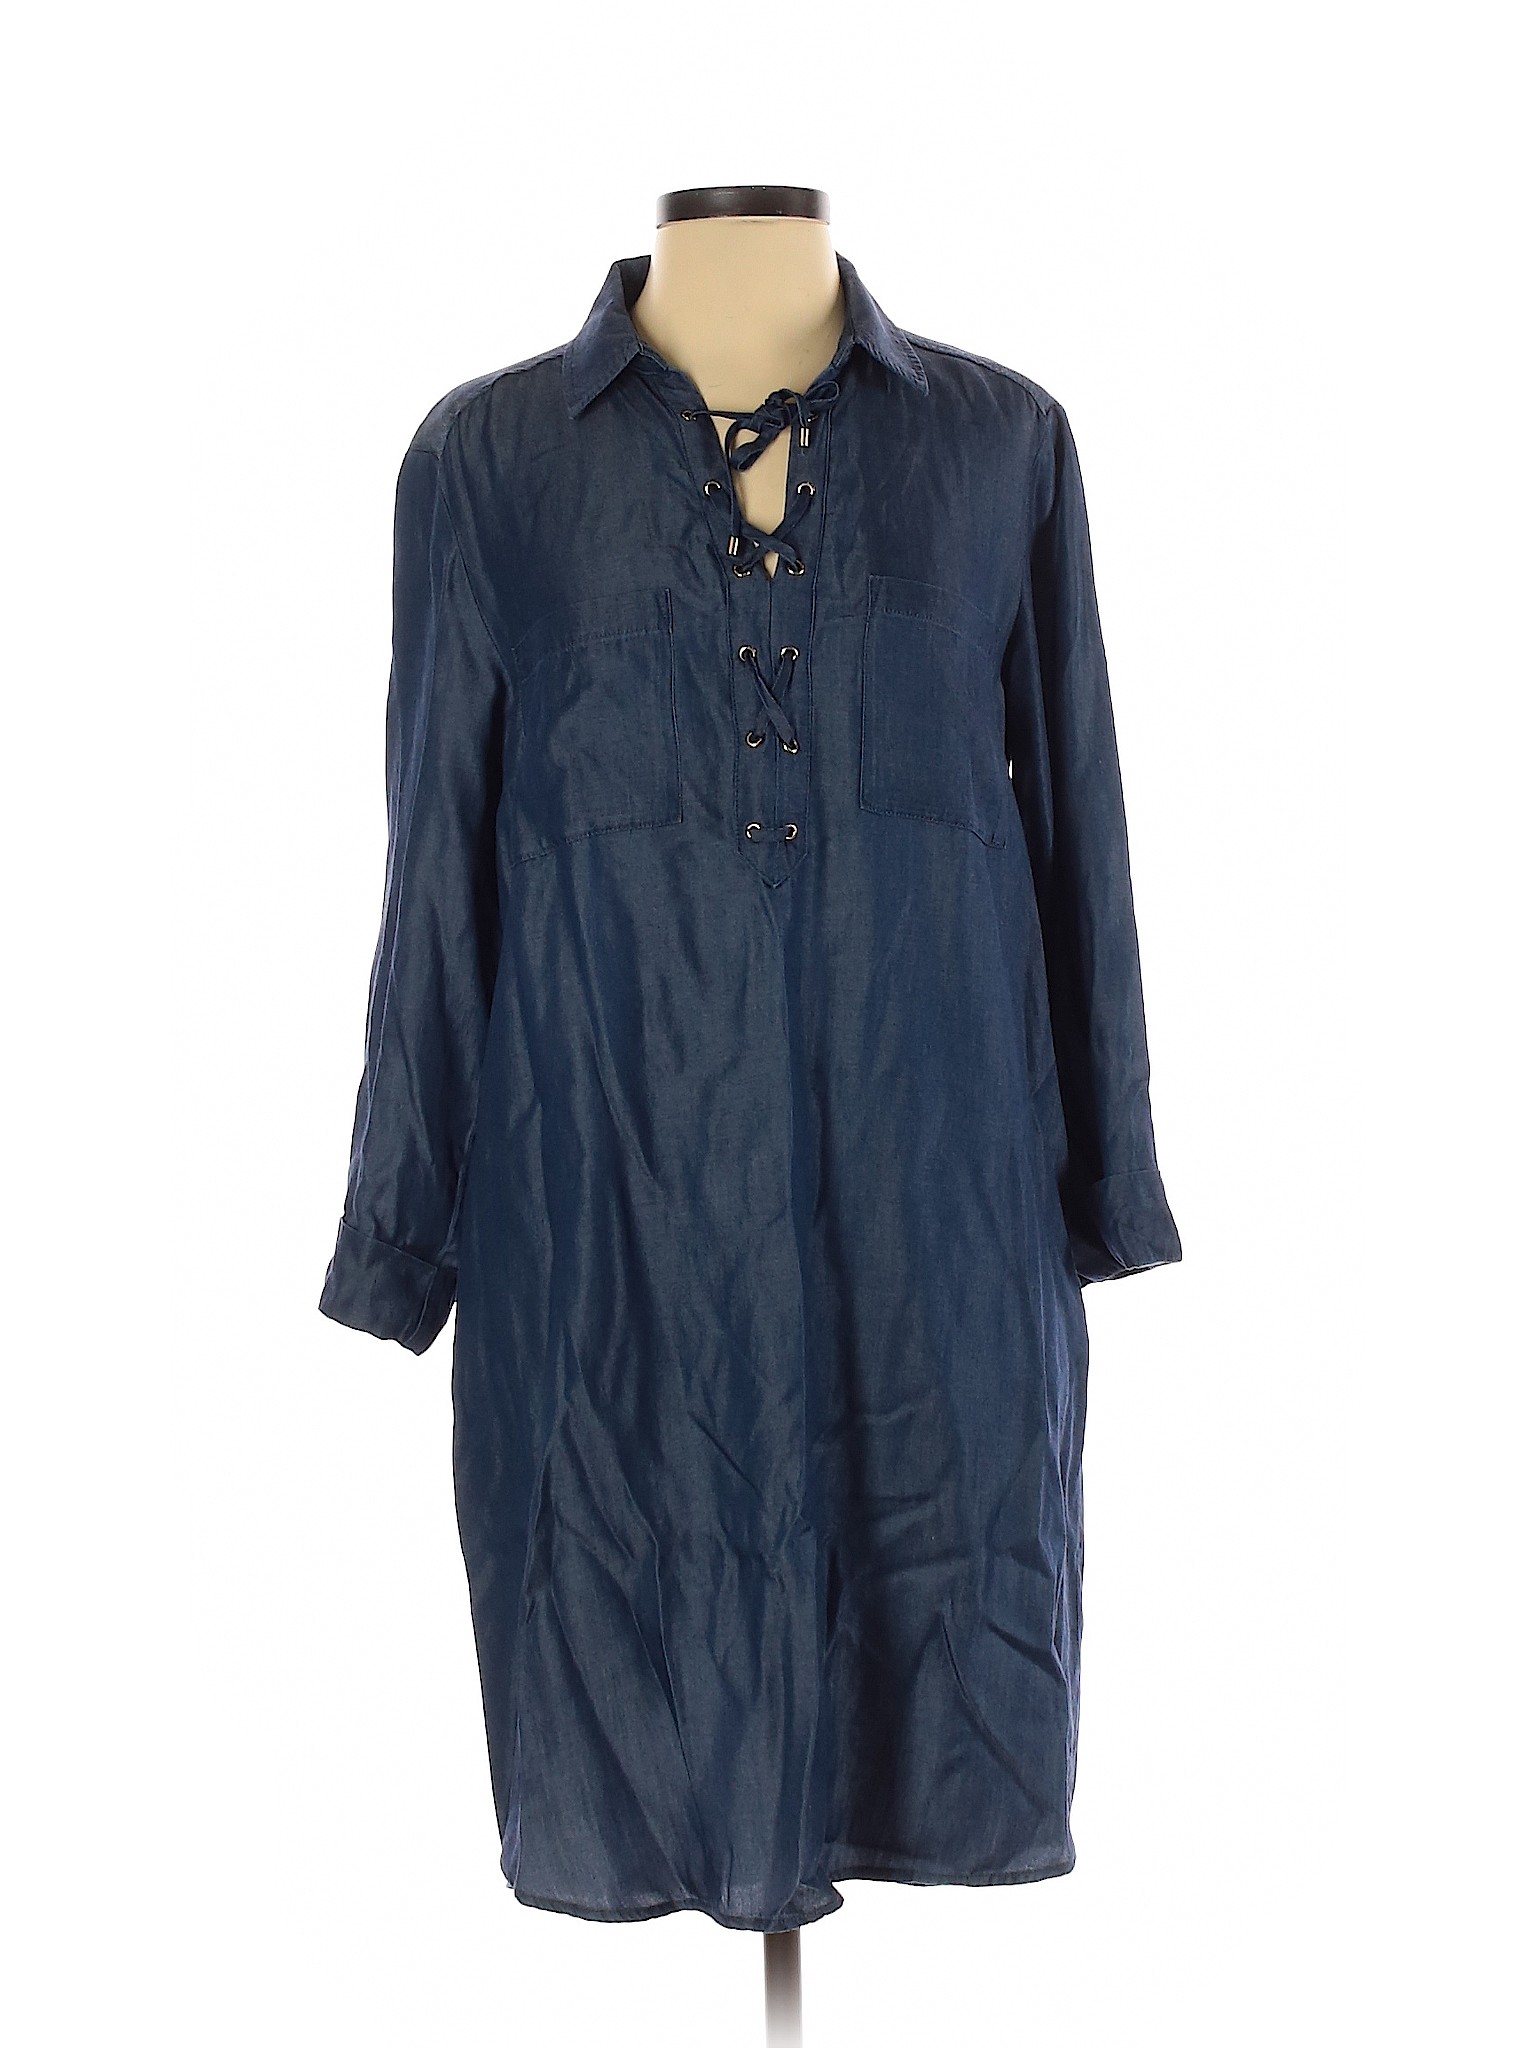 Jones New York Women Blue Casual Dress 4 | eBay